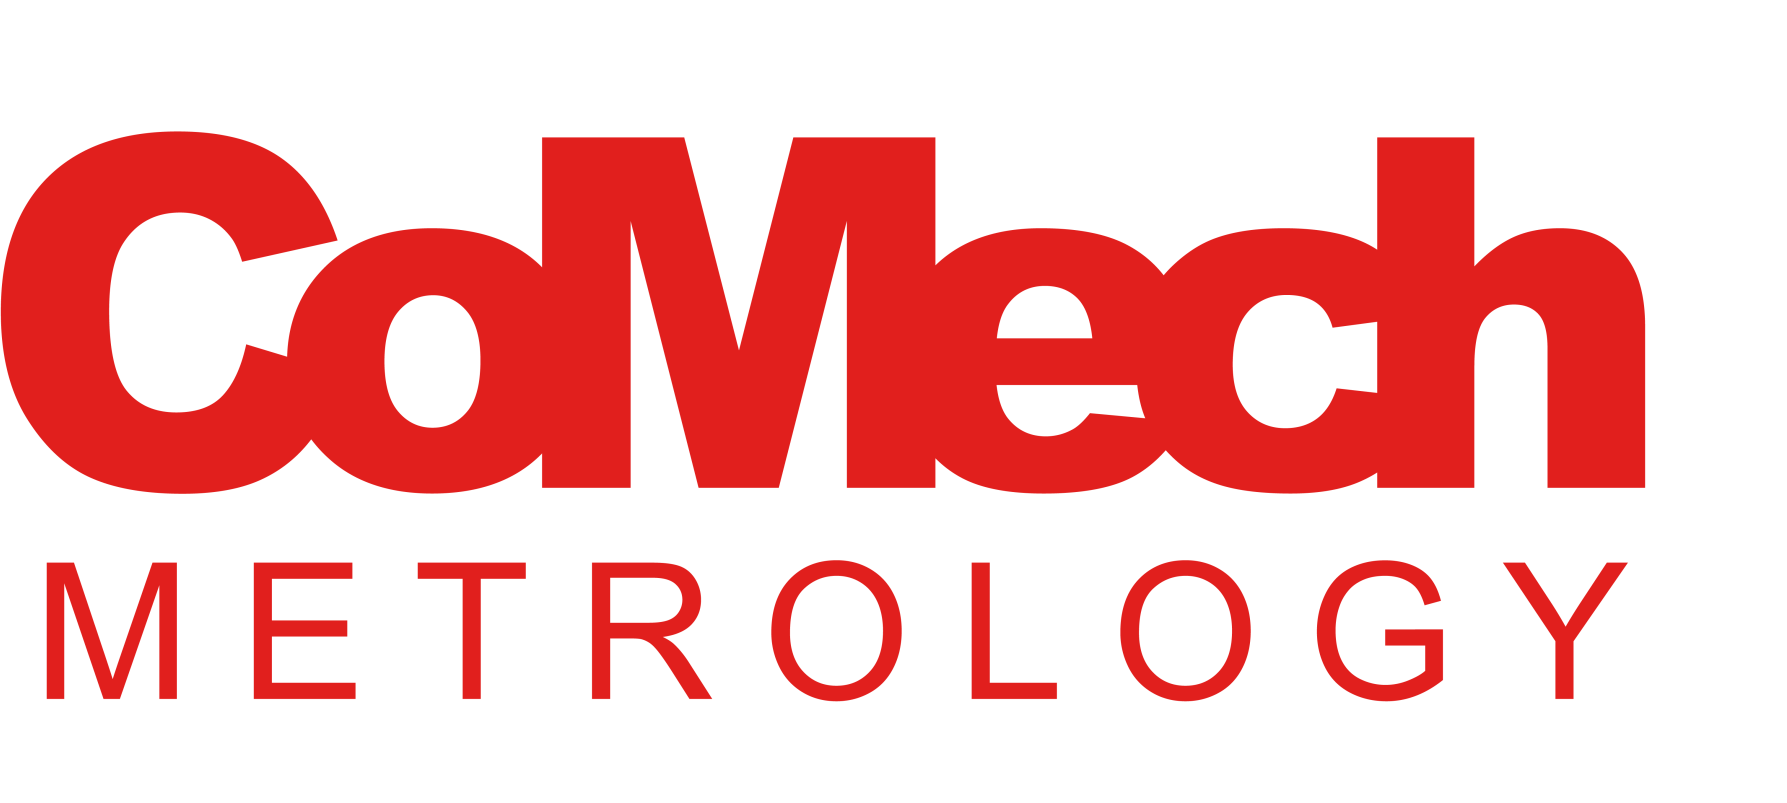 CoMech Metrology Logo